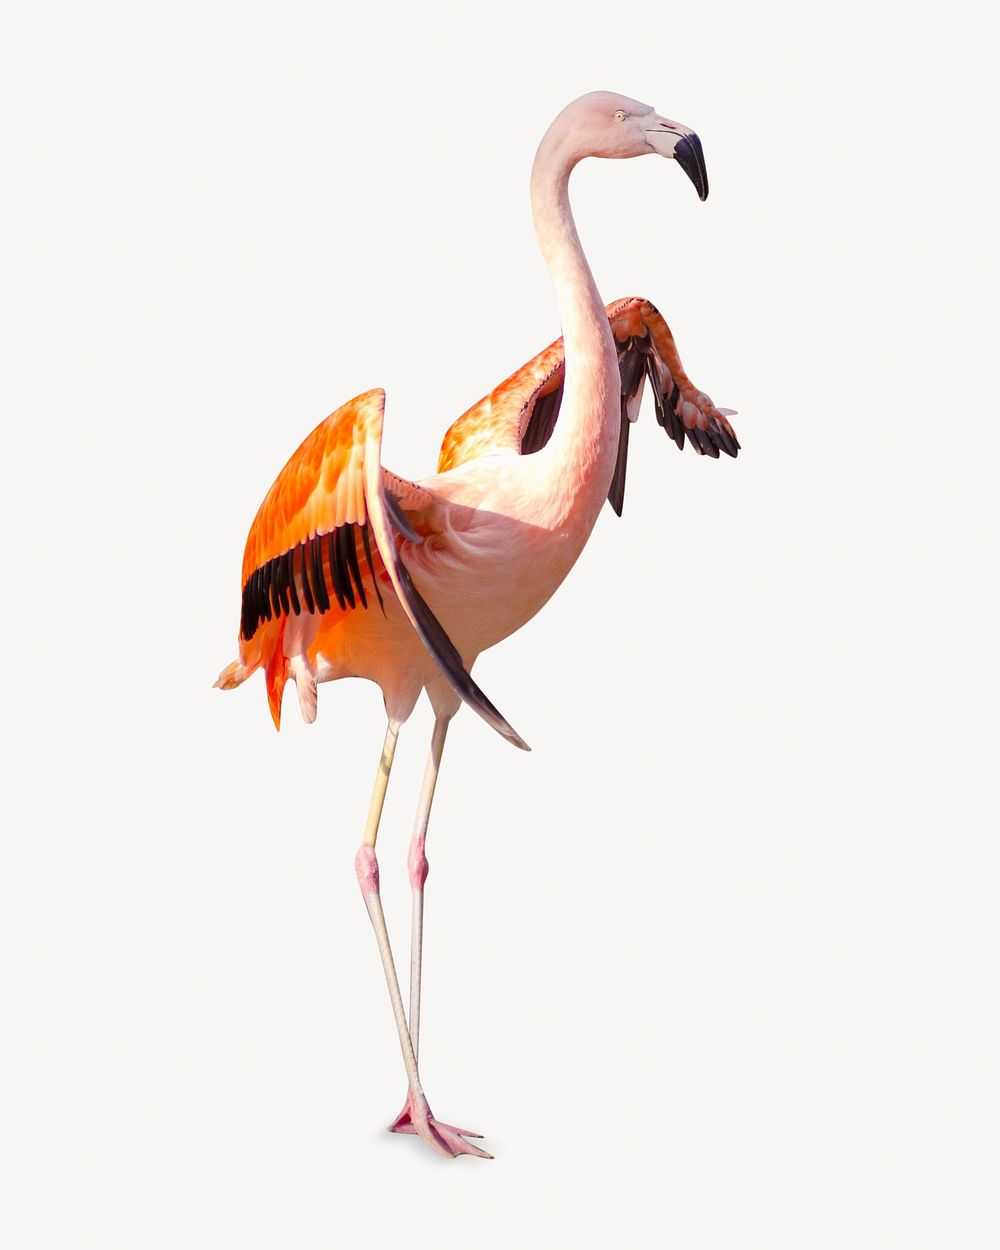 Pink flamingo bird, isolated animal image